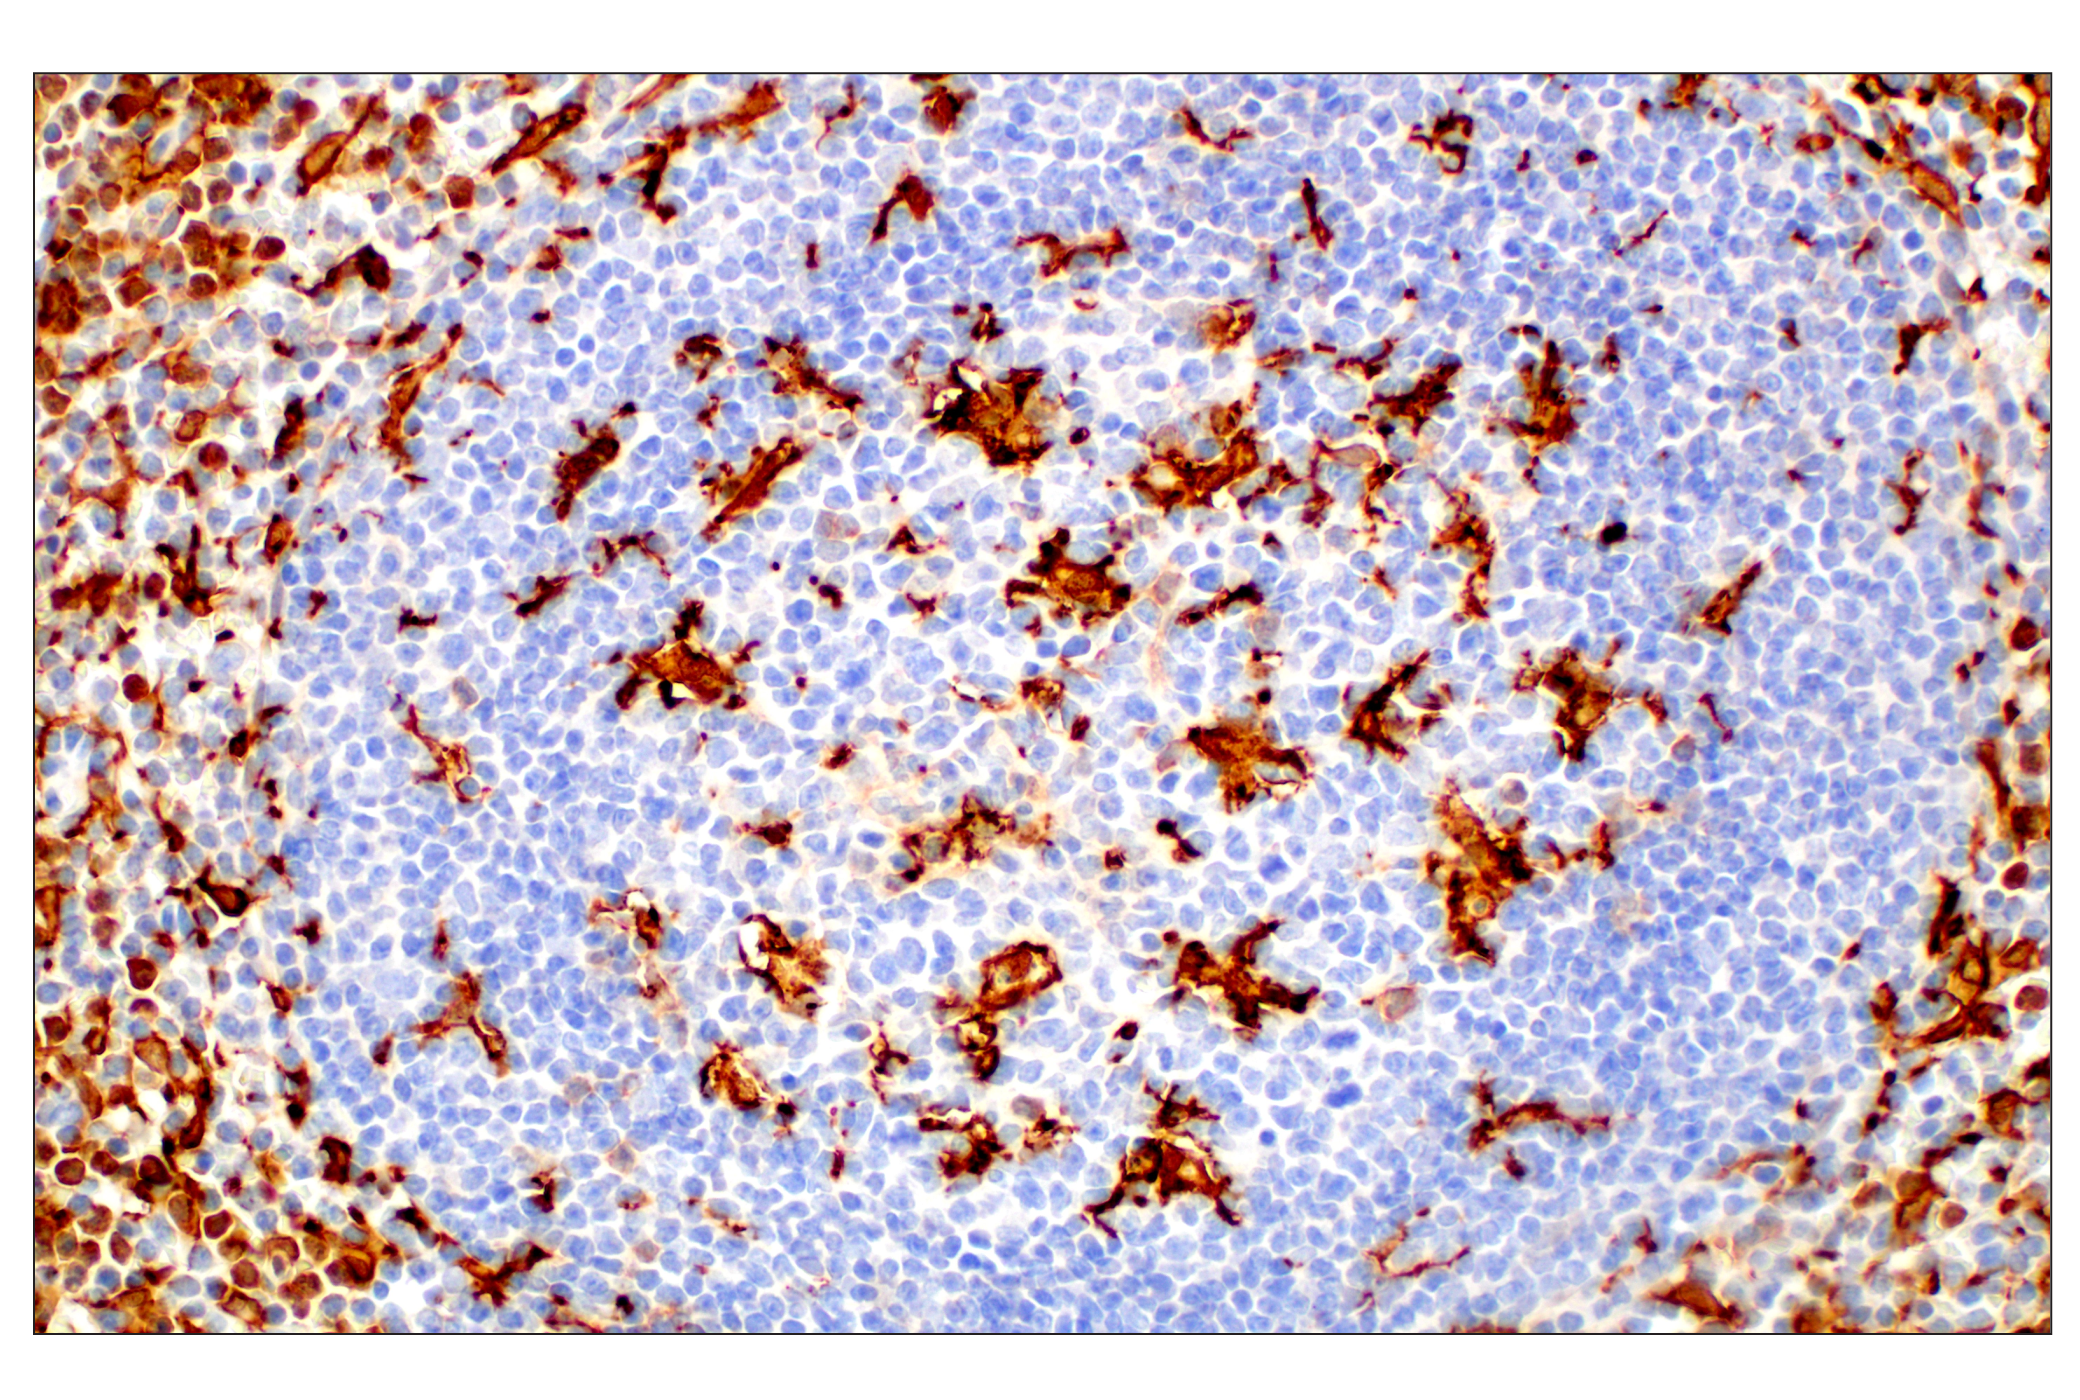  Image 61: Mouse Reactive Alzheimer's Disease Model Microglia Phenotyping IF Antibody Sampler Kit